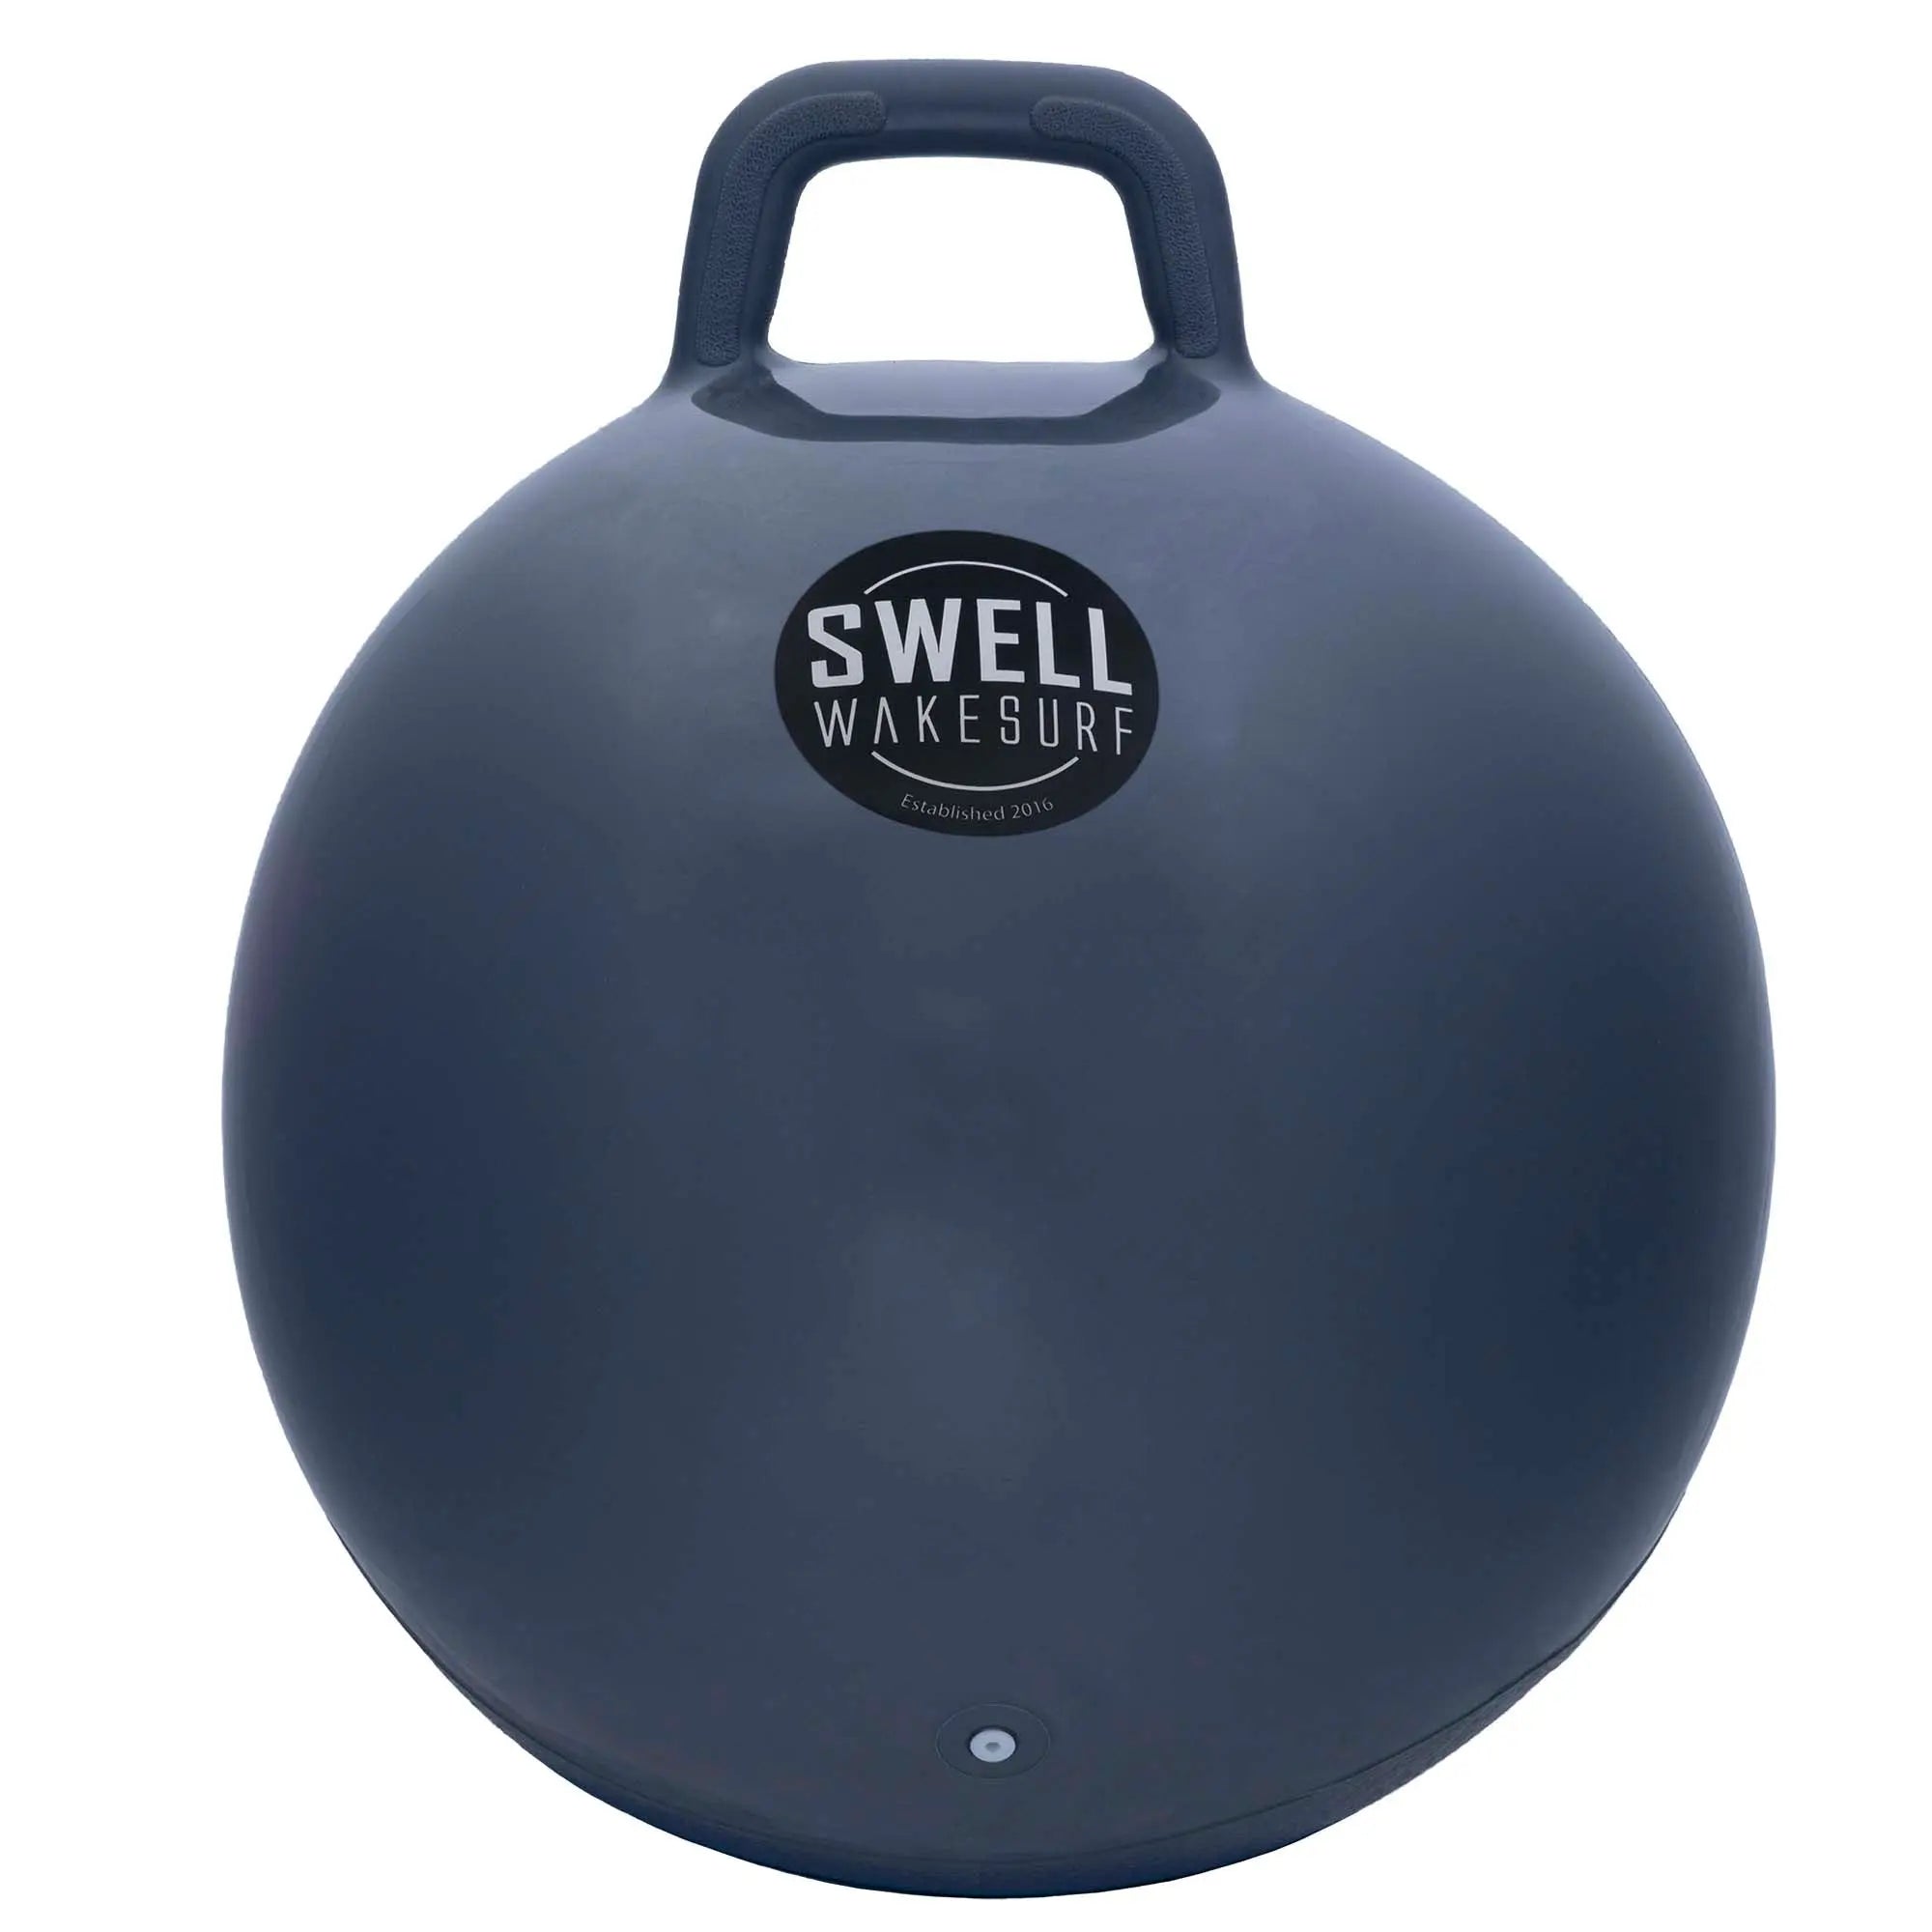 SWELL Wakesurf - Original Buoy Ball Inflatable Bumper - Great For Tie-ups SWELL Wakesurf